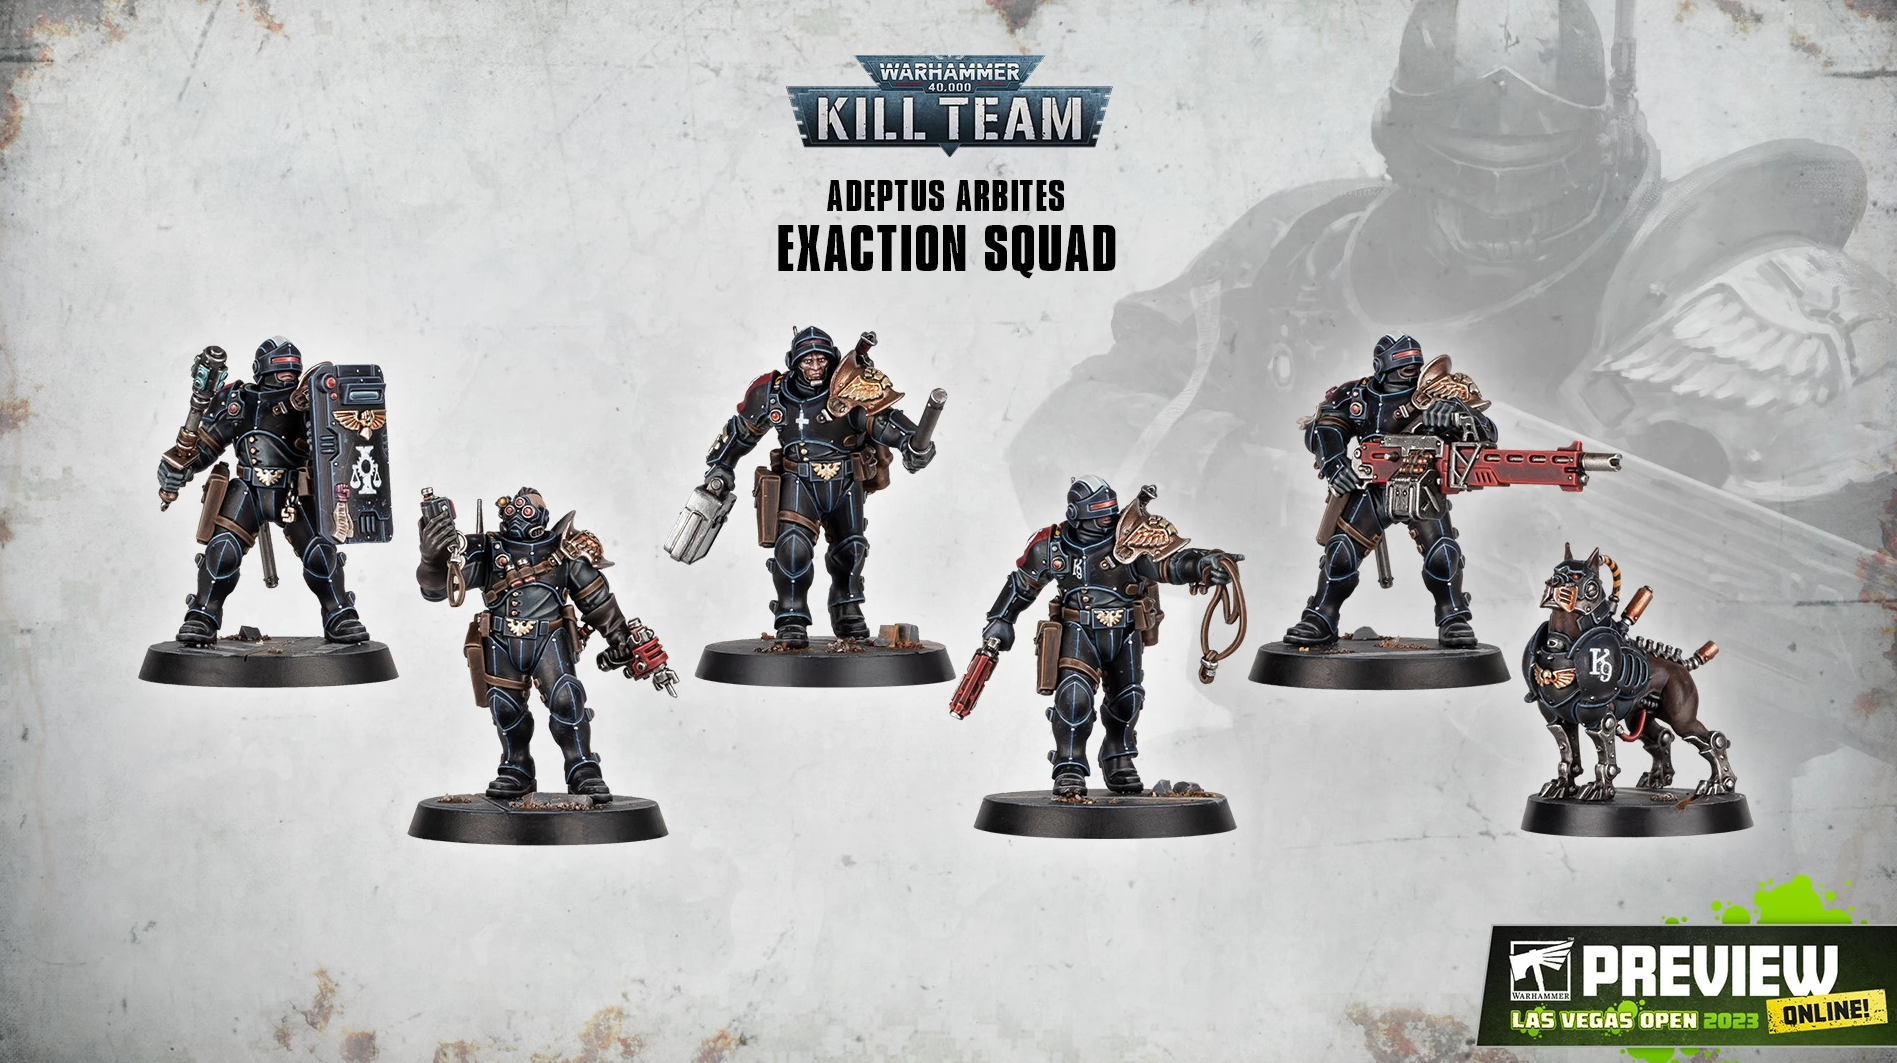 Kill Team - Warhammer Community